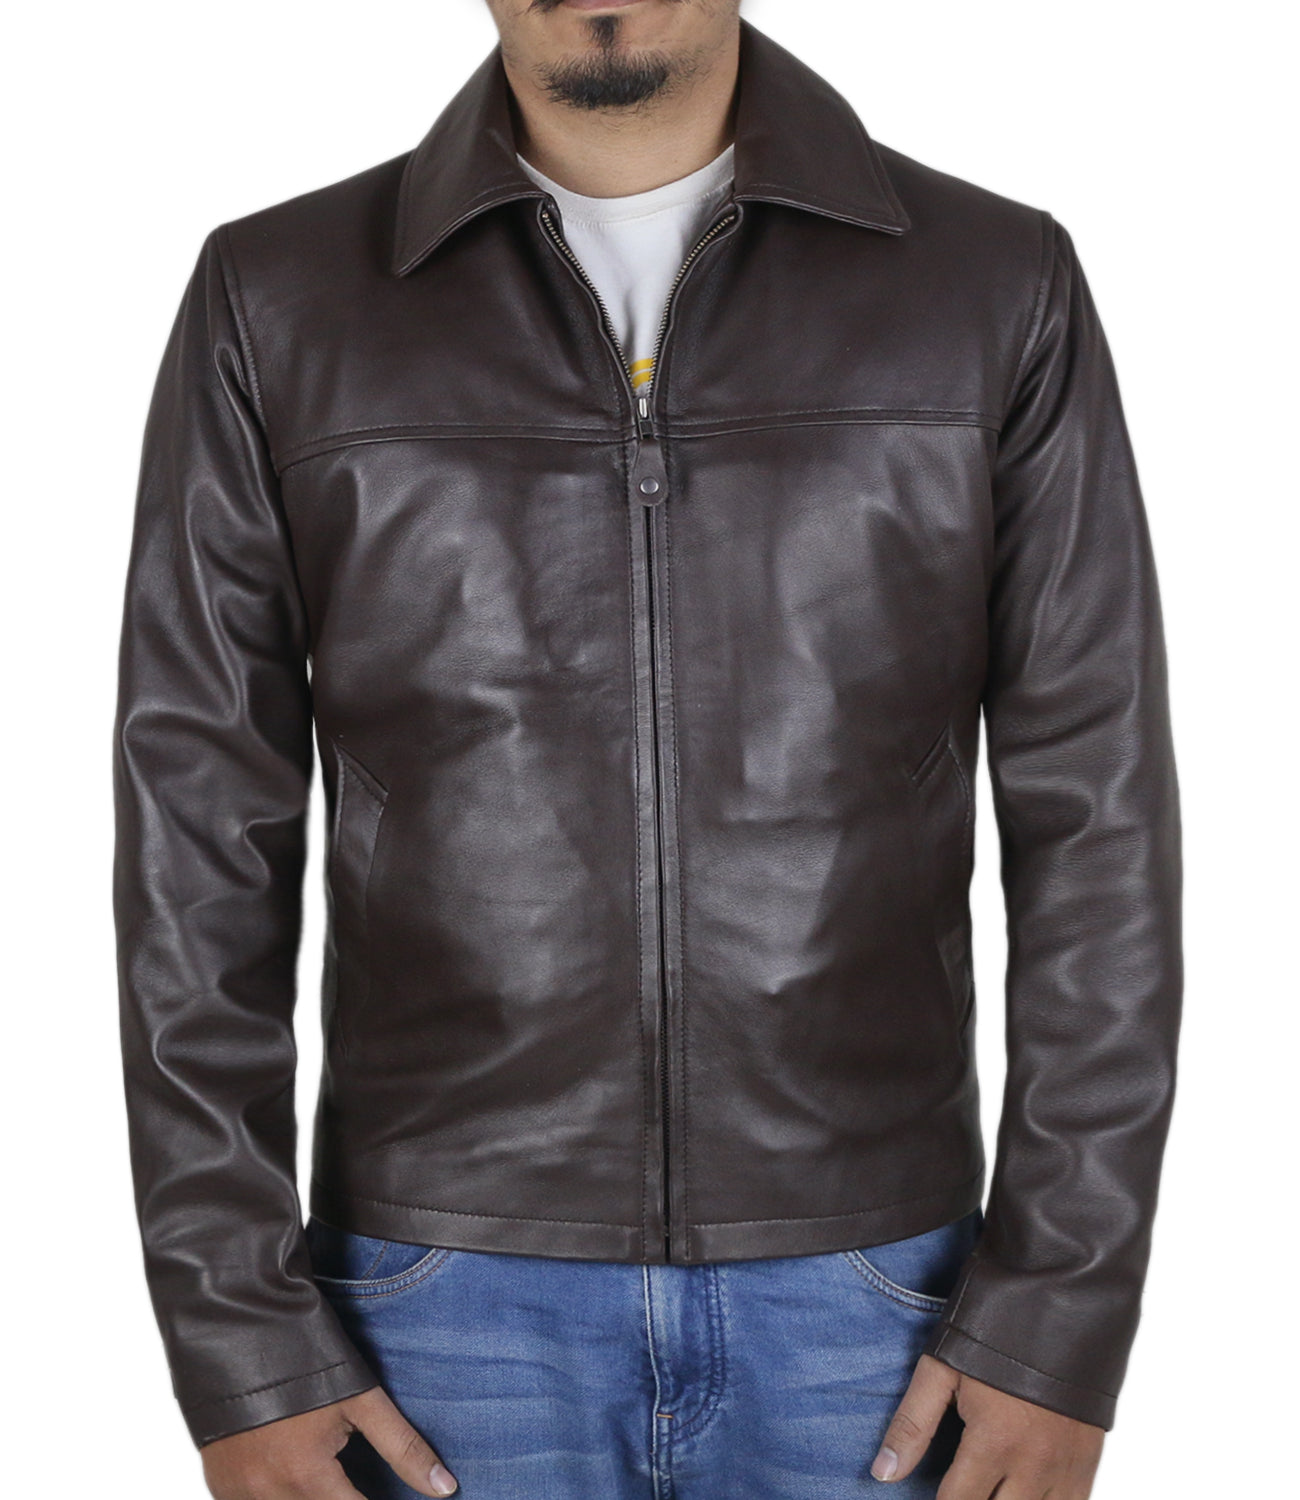 Leather Jackets Hub Mens Genuine Lambskin Leather Jacket (Black, Classic Jacket) - 1501814